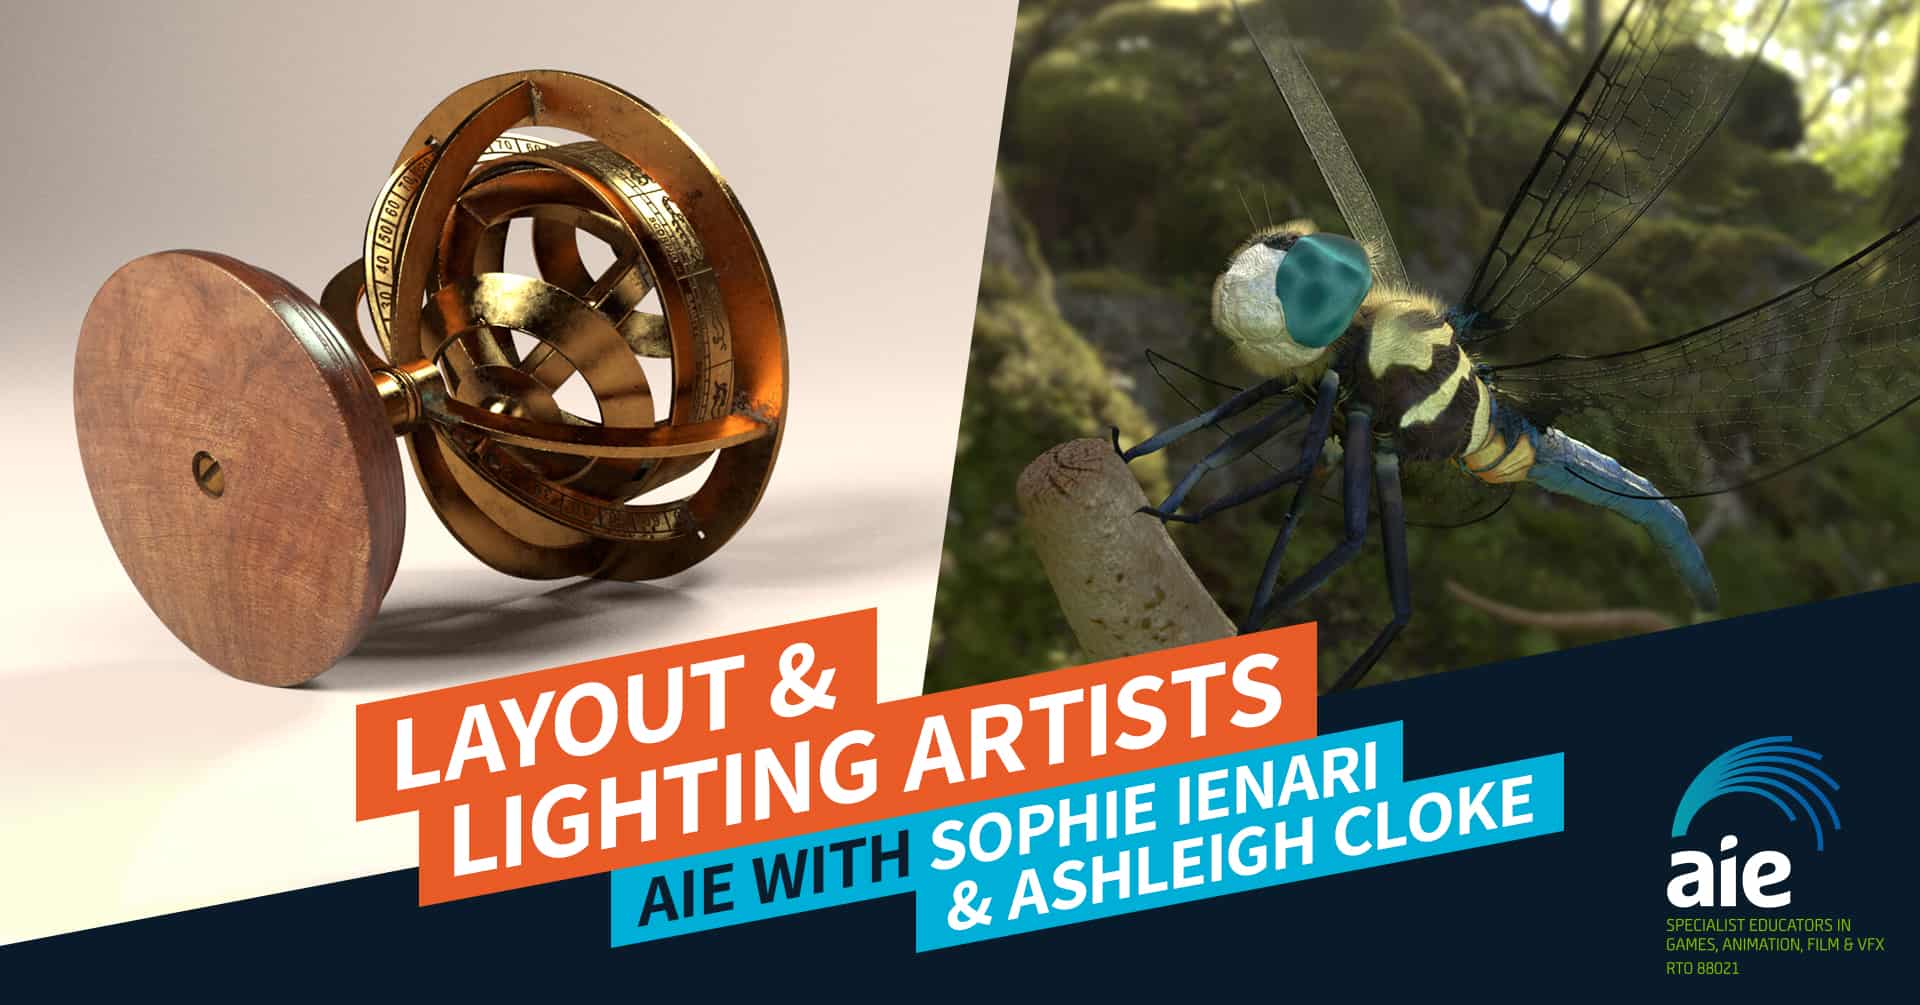 Layout & Lighting Artists: AIE with Sophie Ienari & Ashleigh Cloke | AIE Workshop